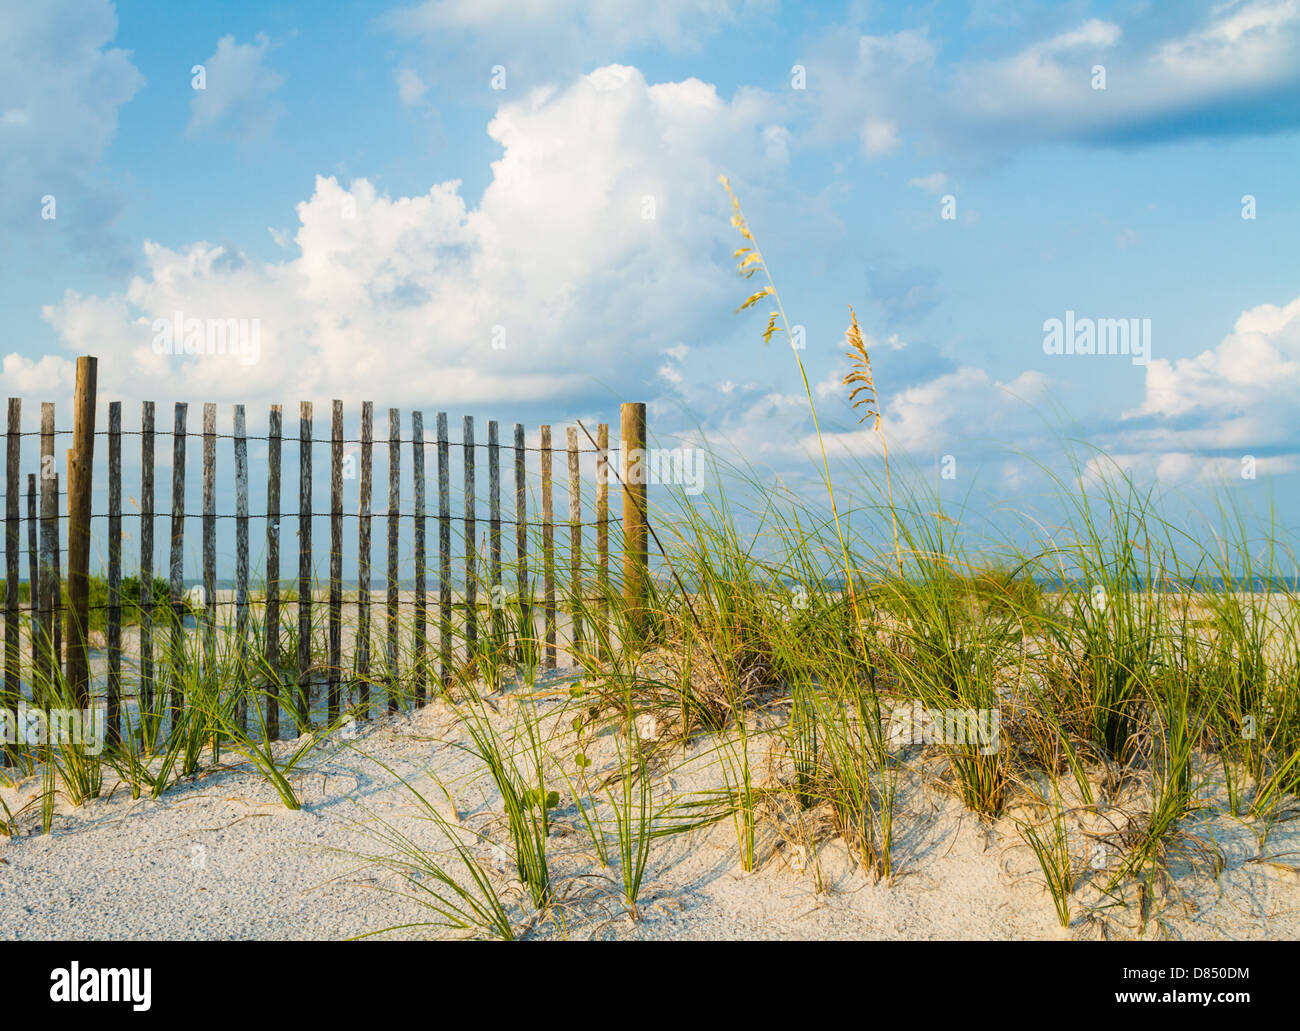 A sand dune with sea grass along a sand fence on the beach. Stock Photo